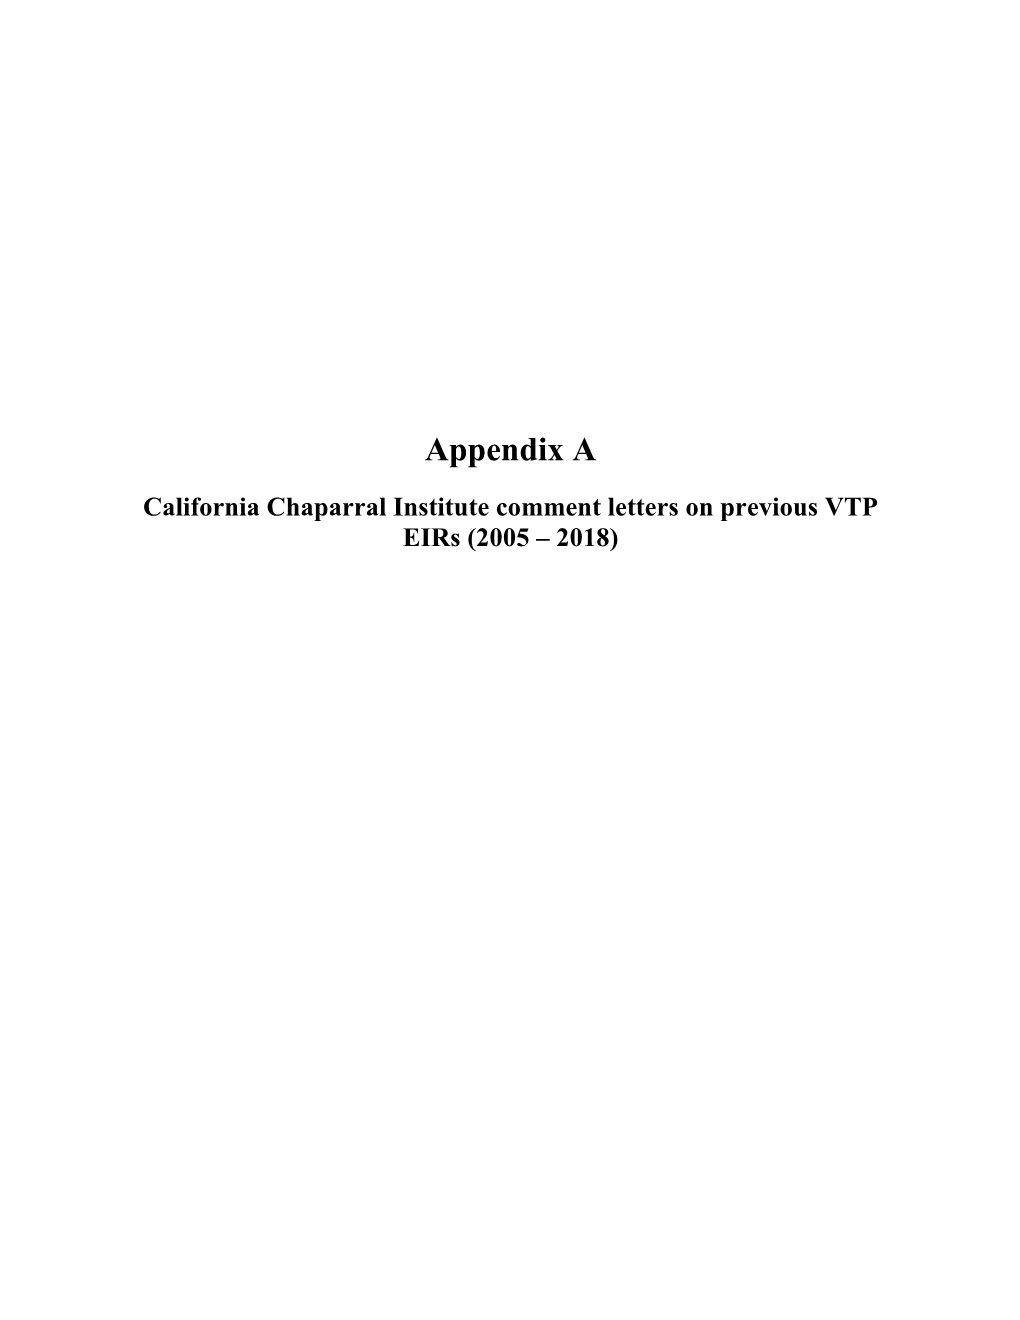 Appendix a California Chaparral Institute Comment Letters on Previous VTP Eirs (2005 – 2018)